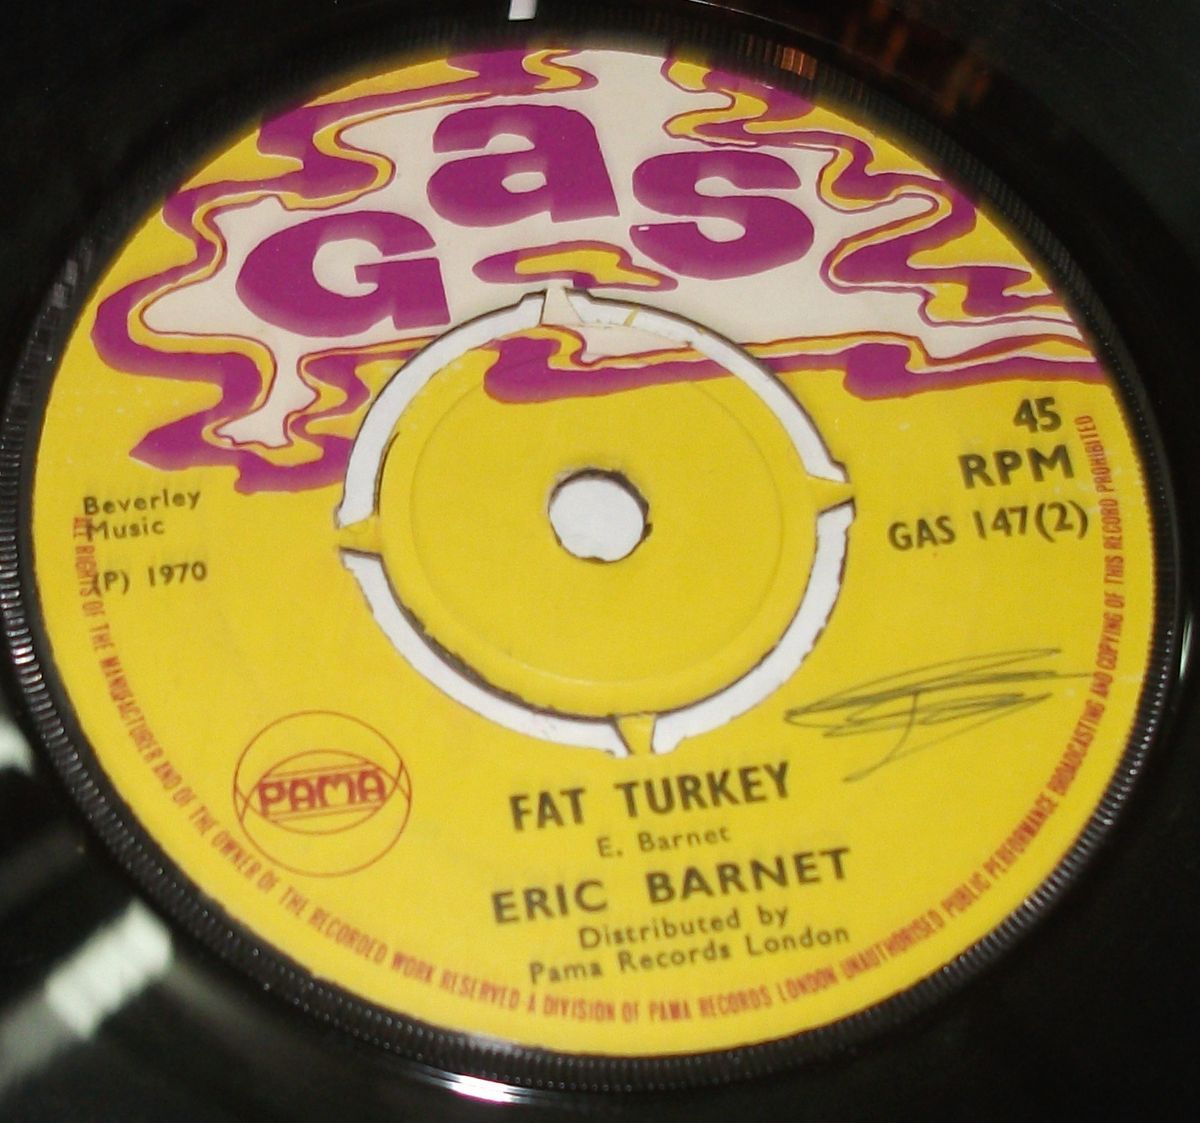 Eric Barnet 1970 Vinyl 45 rpm Bumper to Bumper and Fat Turkey on the 